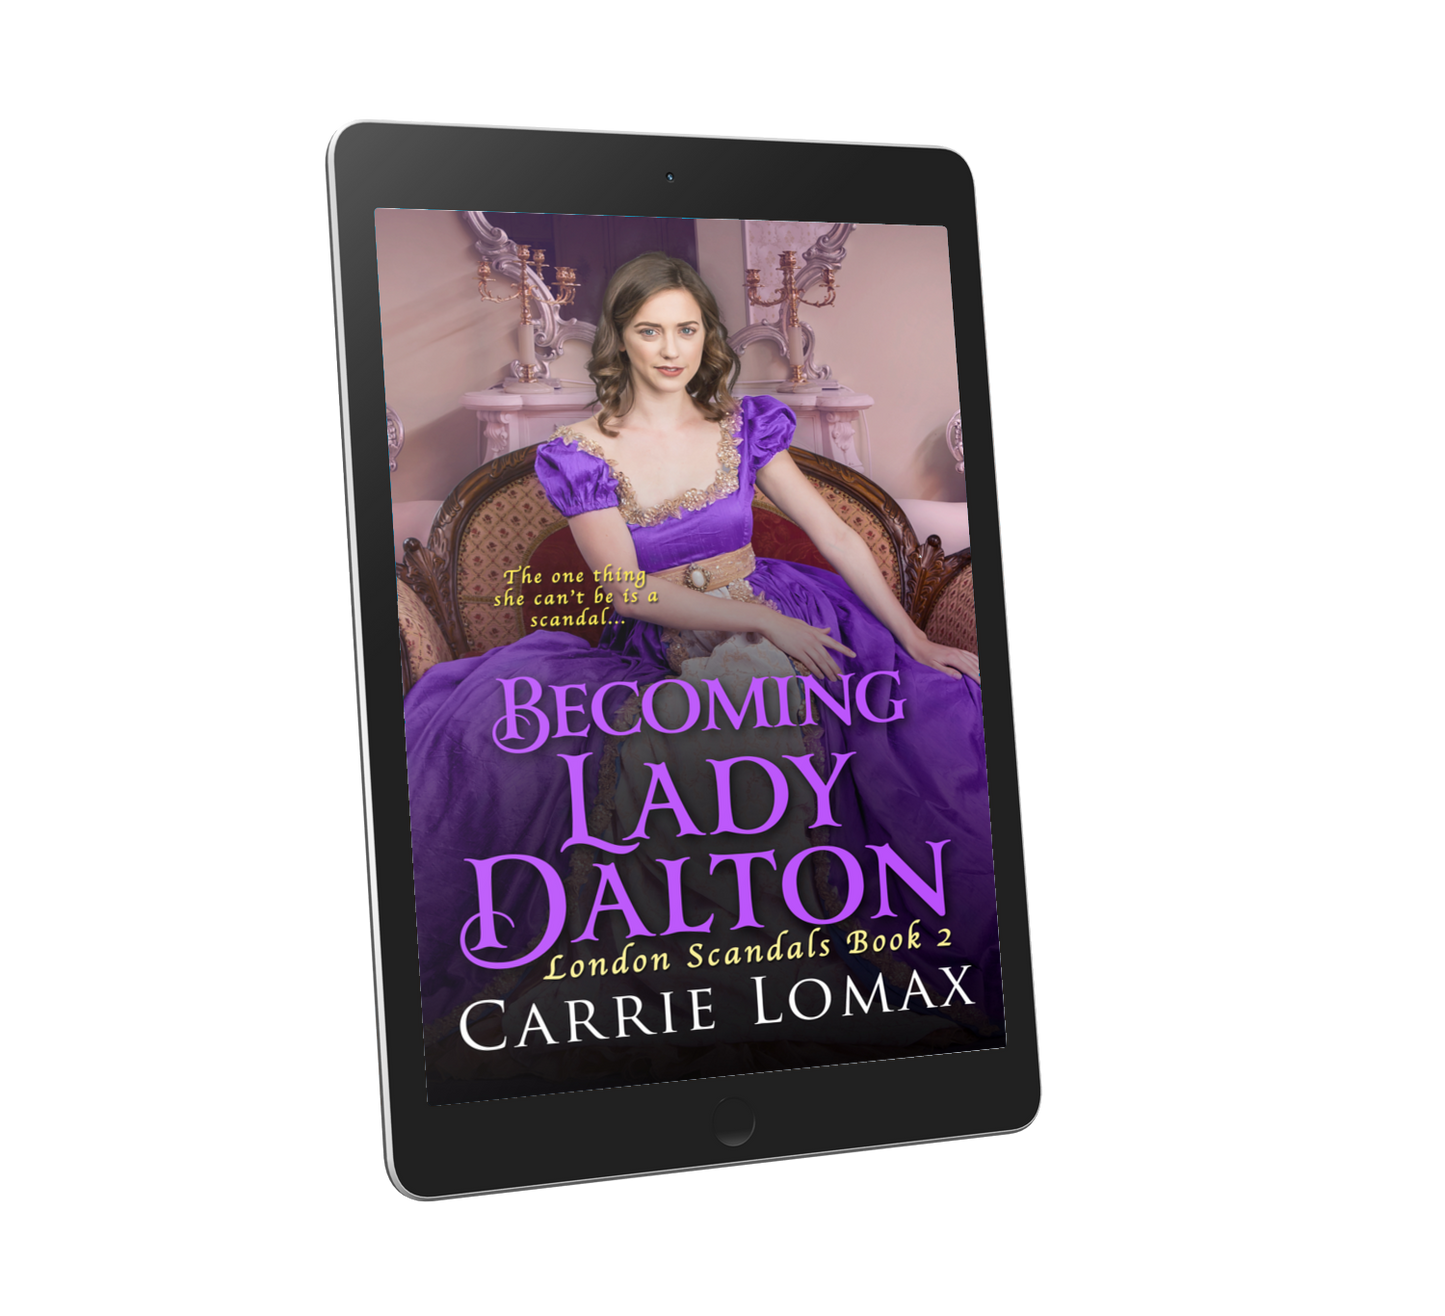 Becoming Lady Dalton - eBook